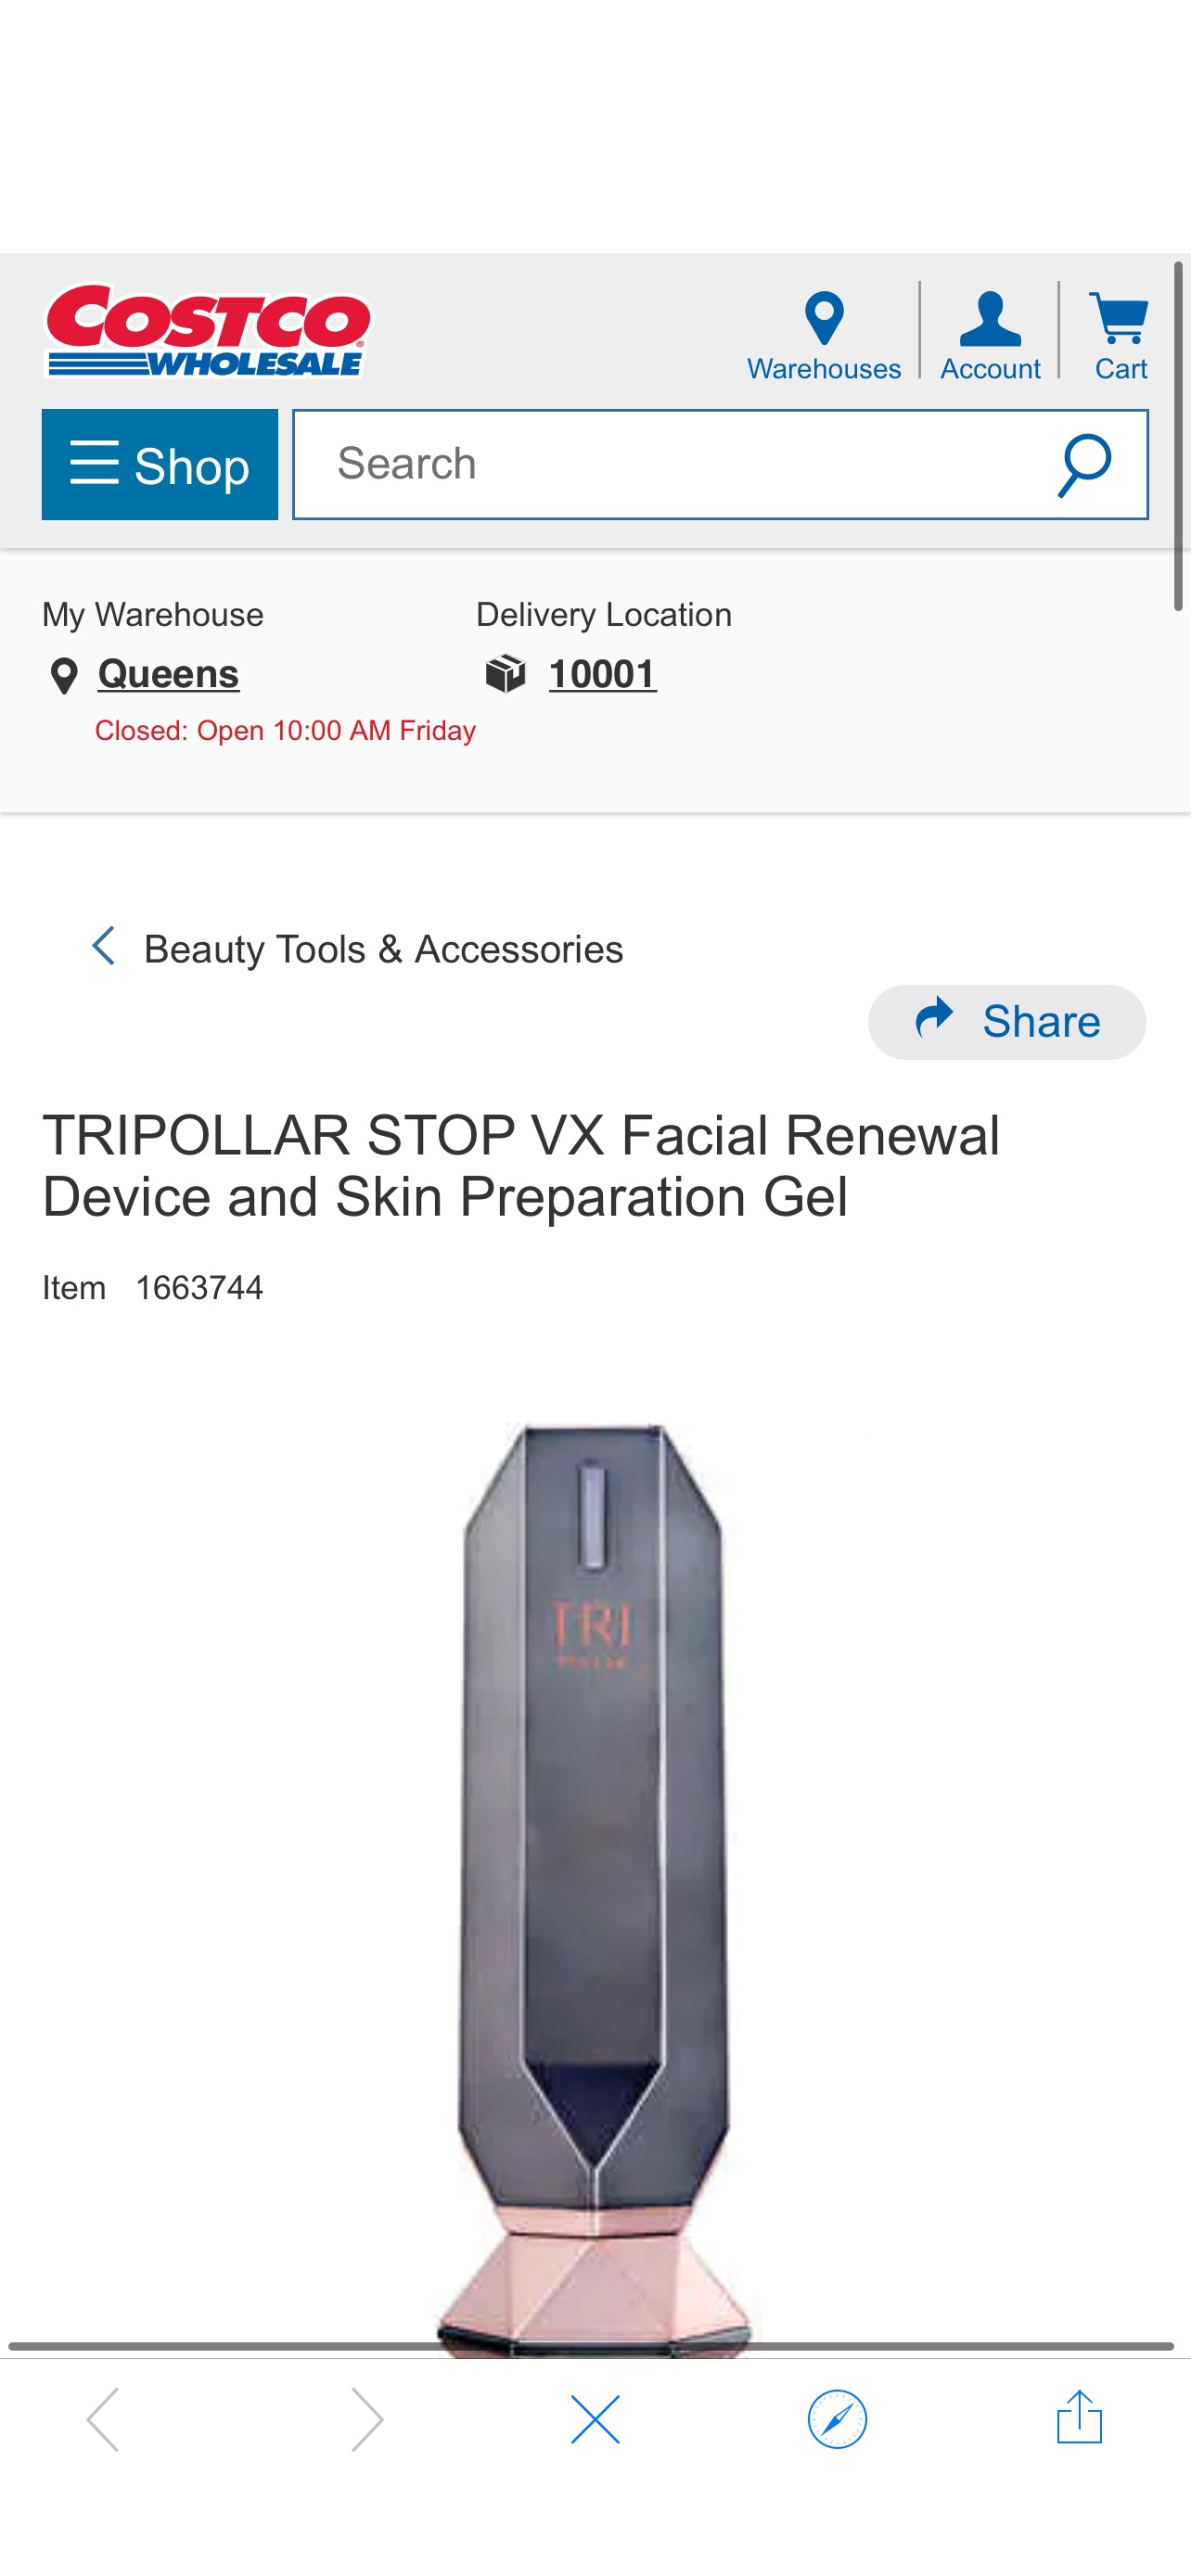 TRIPOLLAR STOP VX Facial Renewal Device and Skin Preparation Gel | Costco